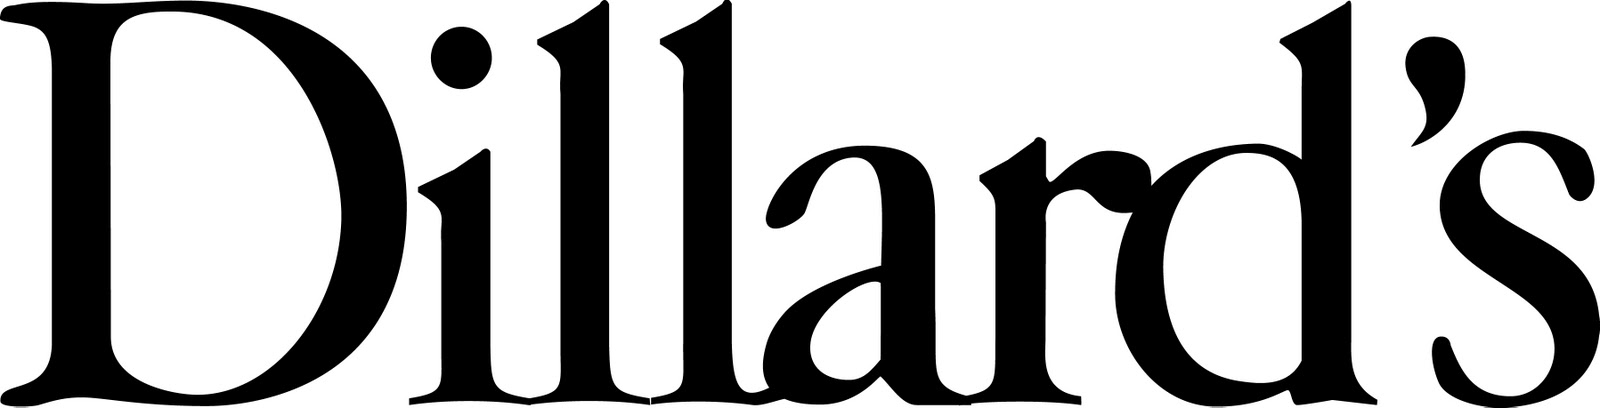 Waltox Logo photo - 1